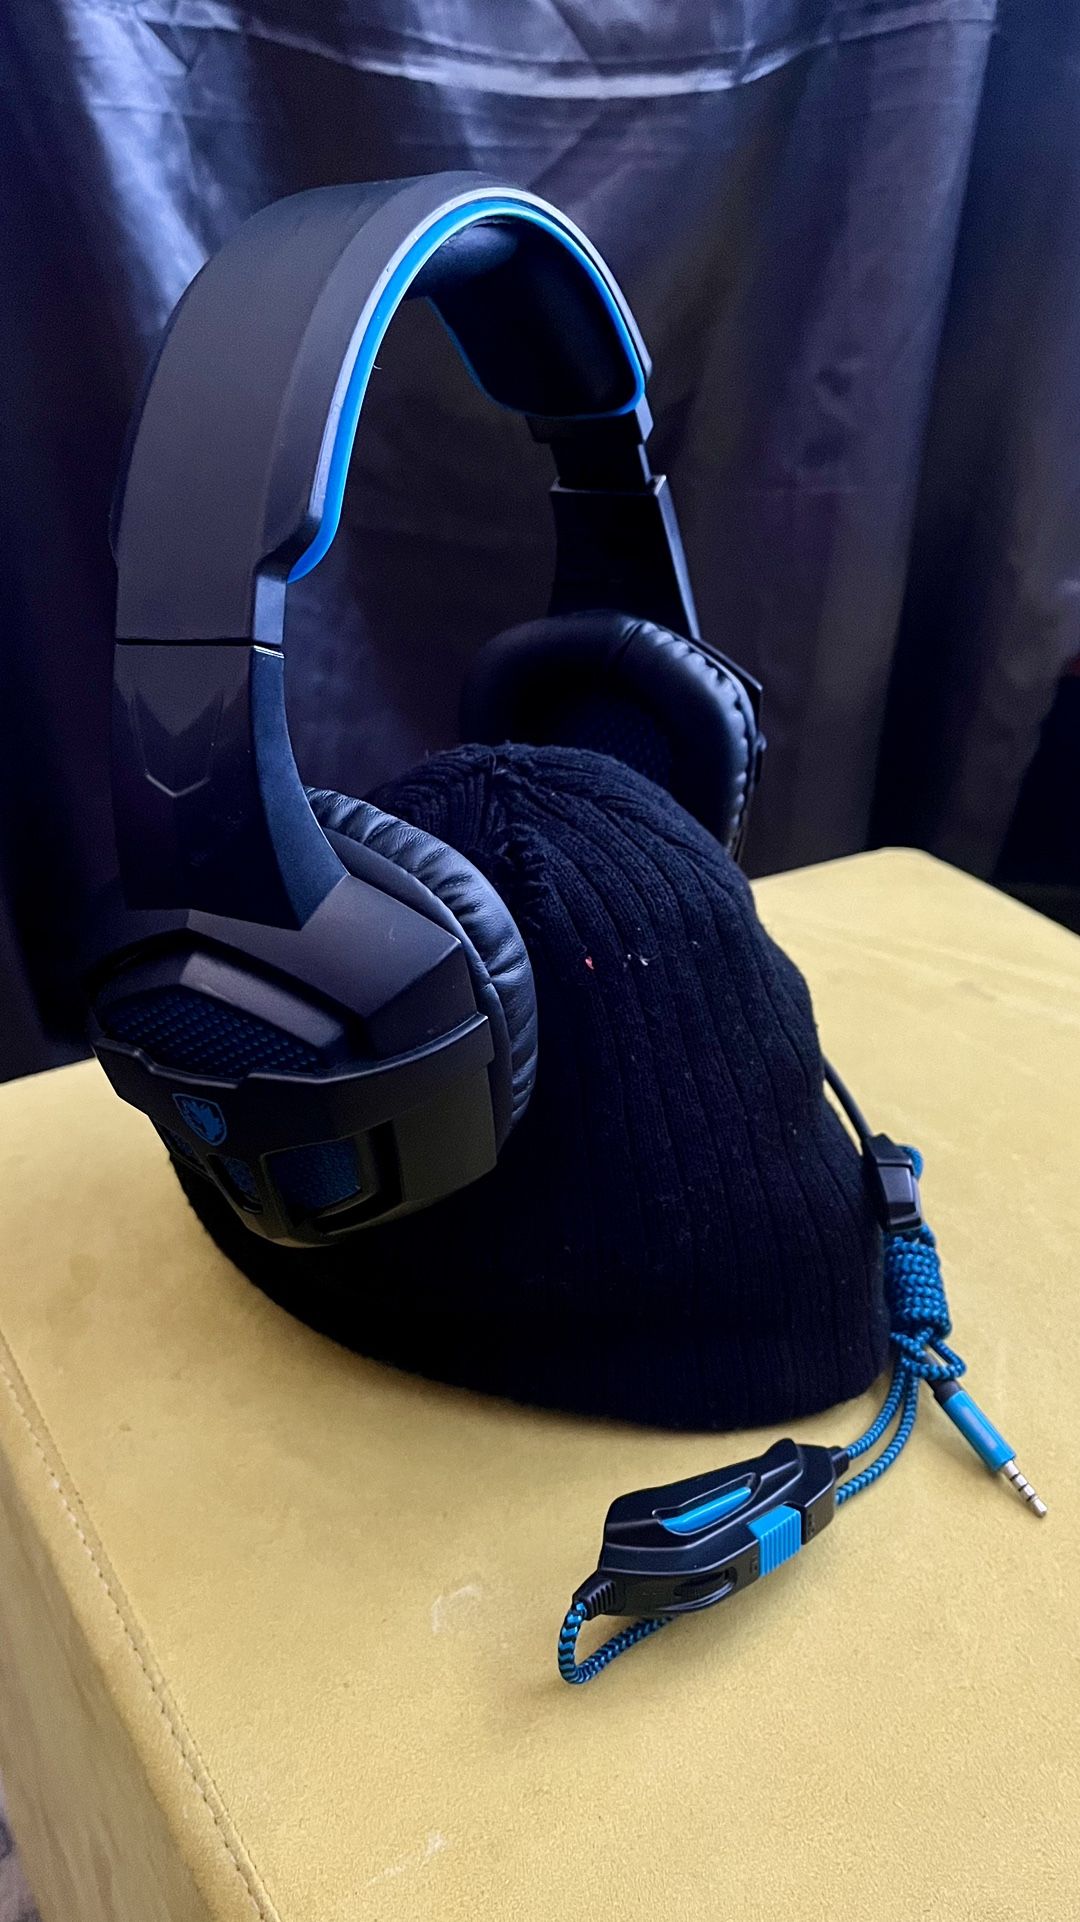 Sades SA-807 Gaming Headset Black Blue  Pc Xbox  Laptop Mic Muted Headphones 